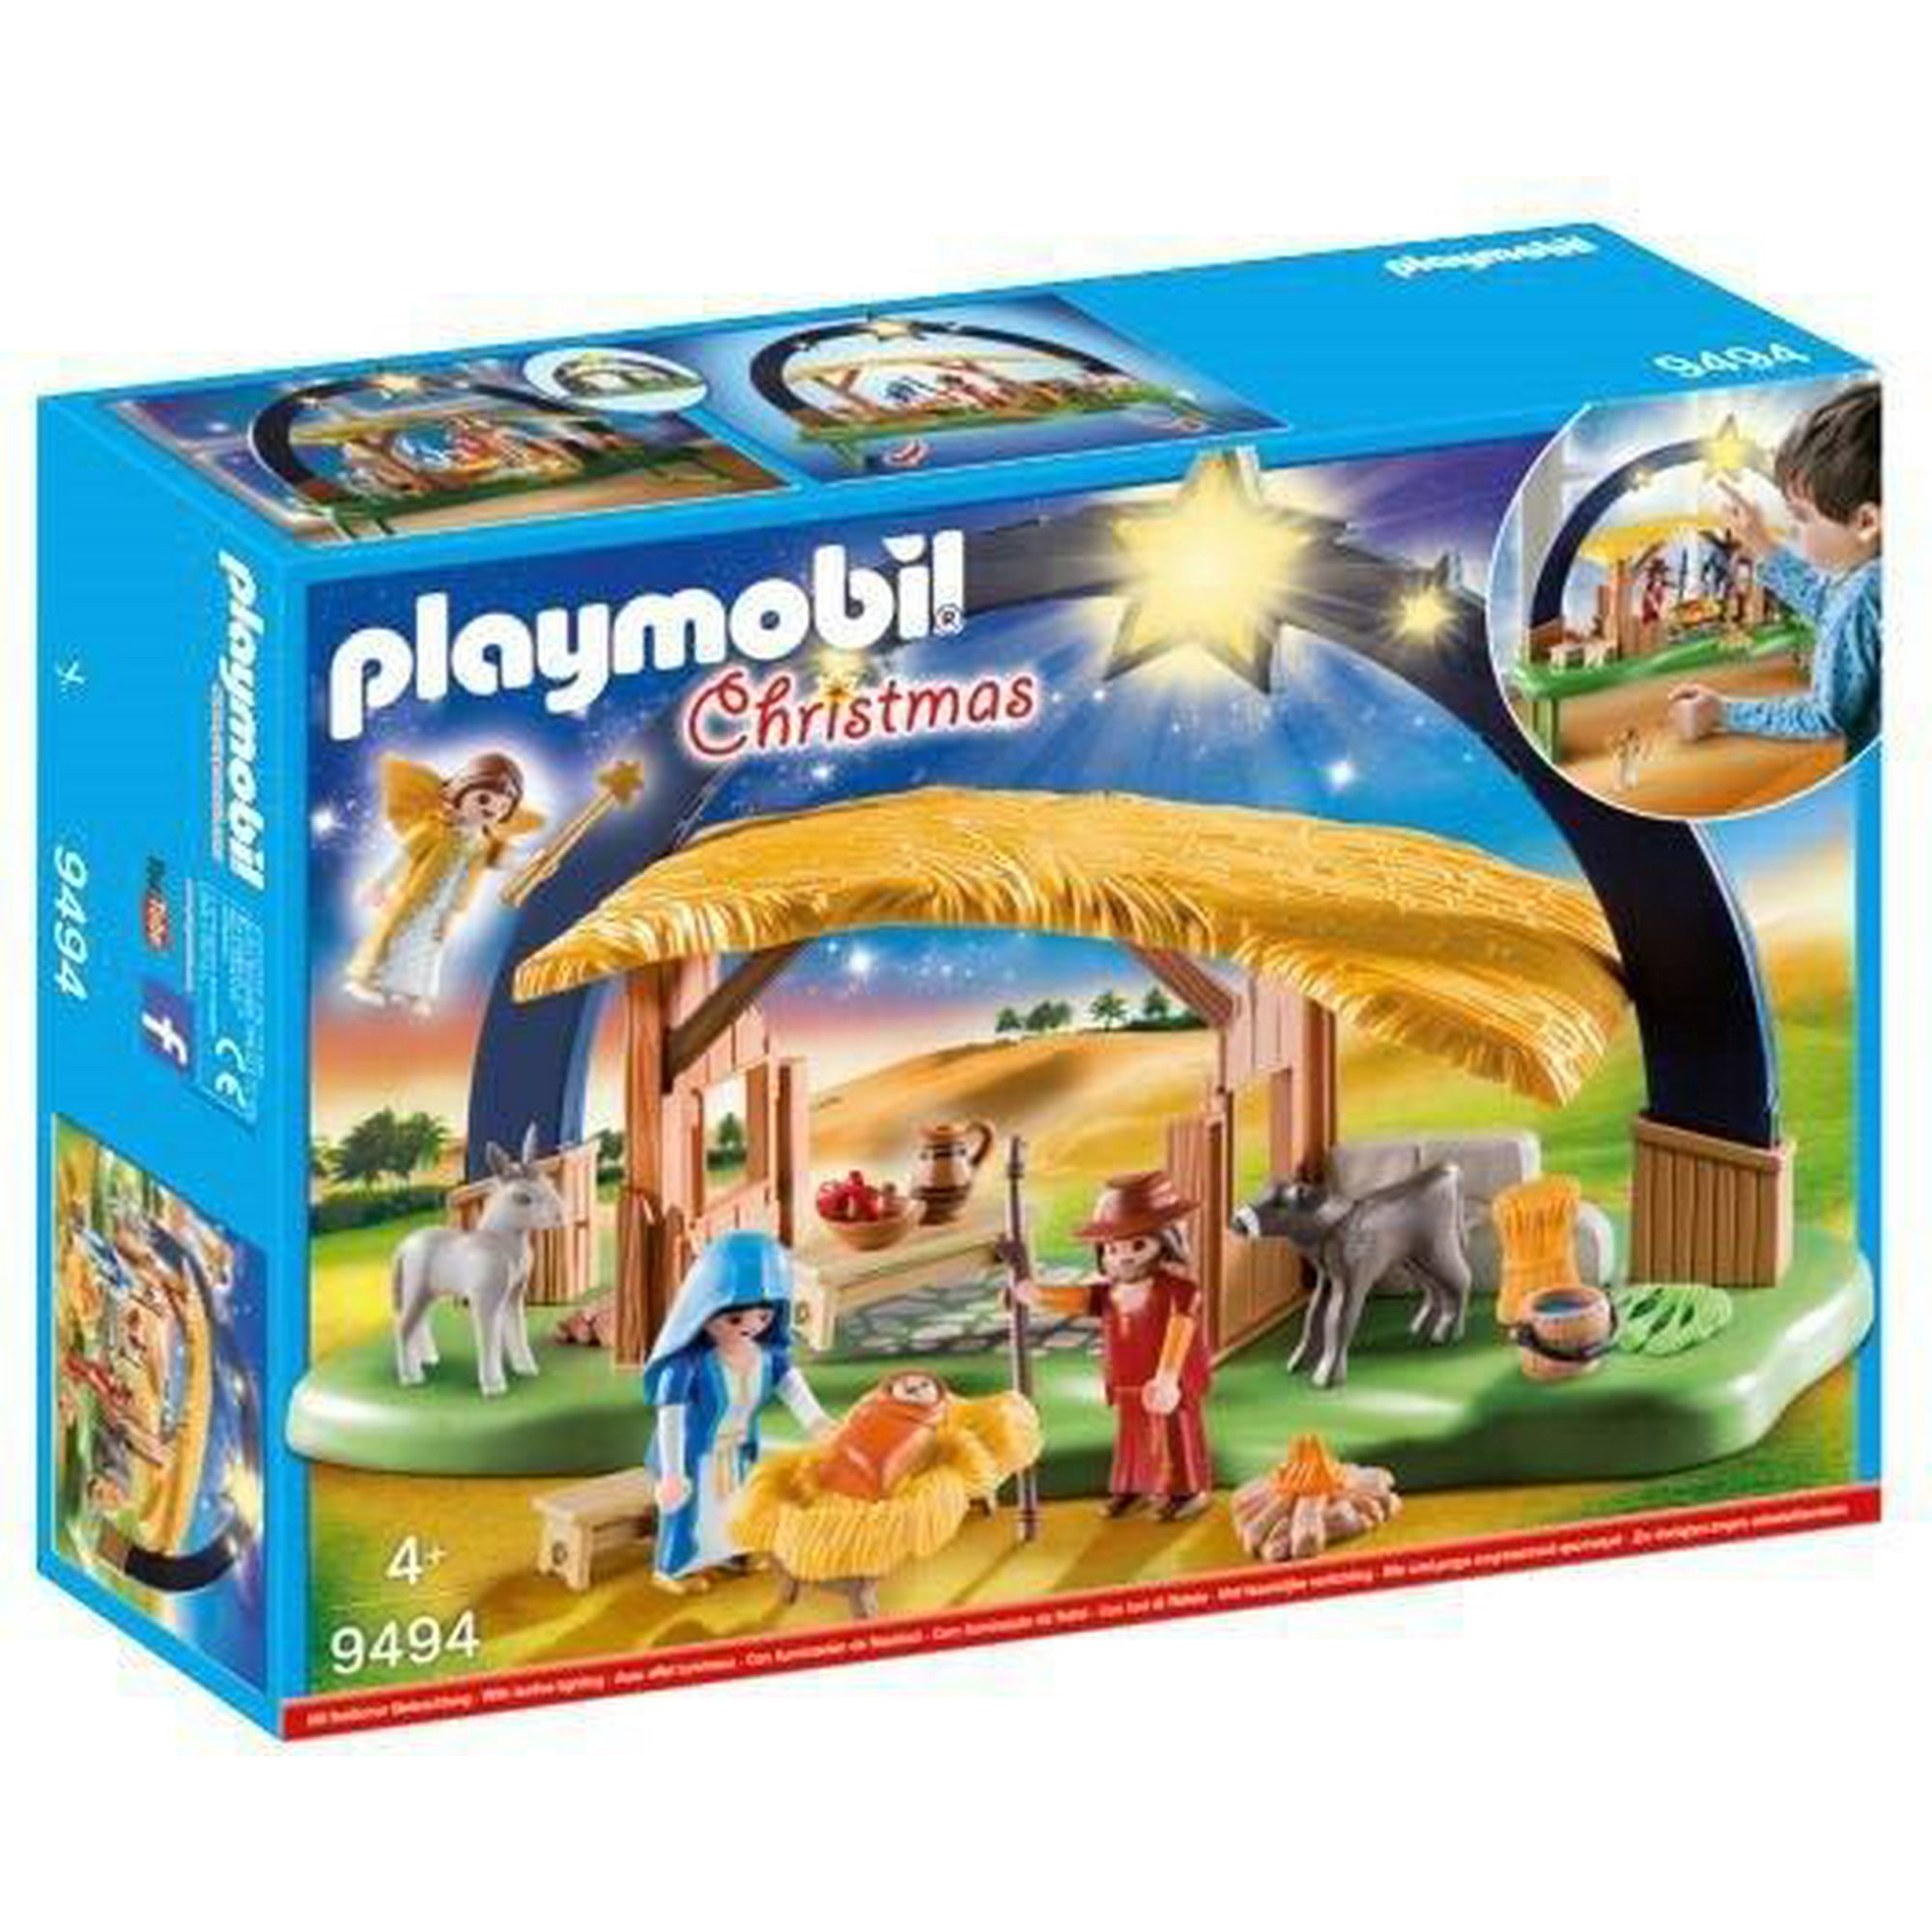 Playmobil Crèche avec illumination